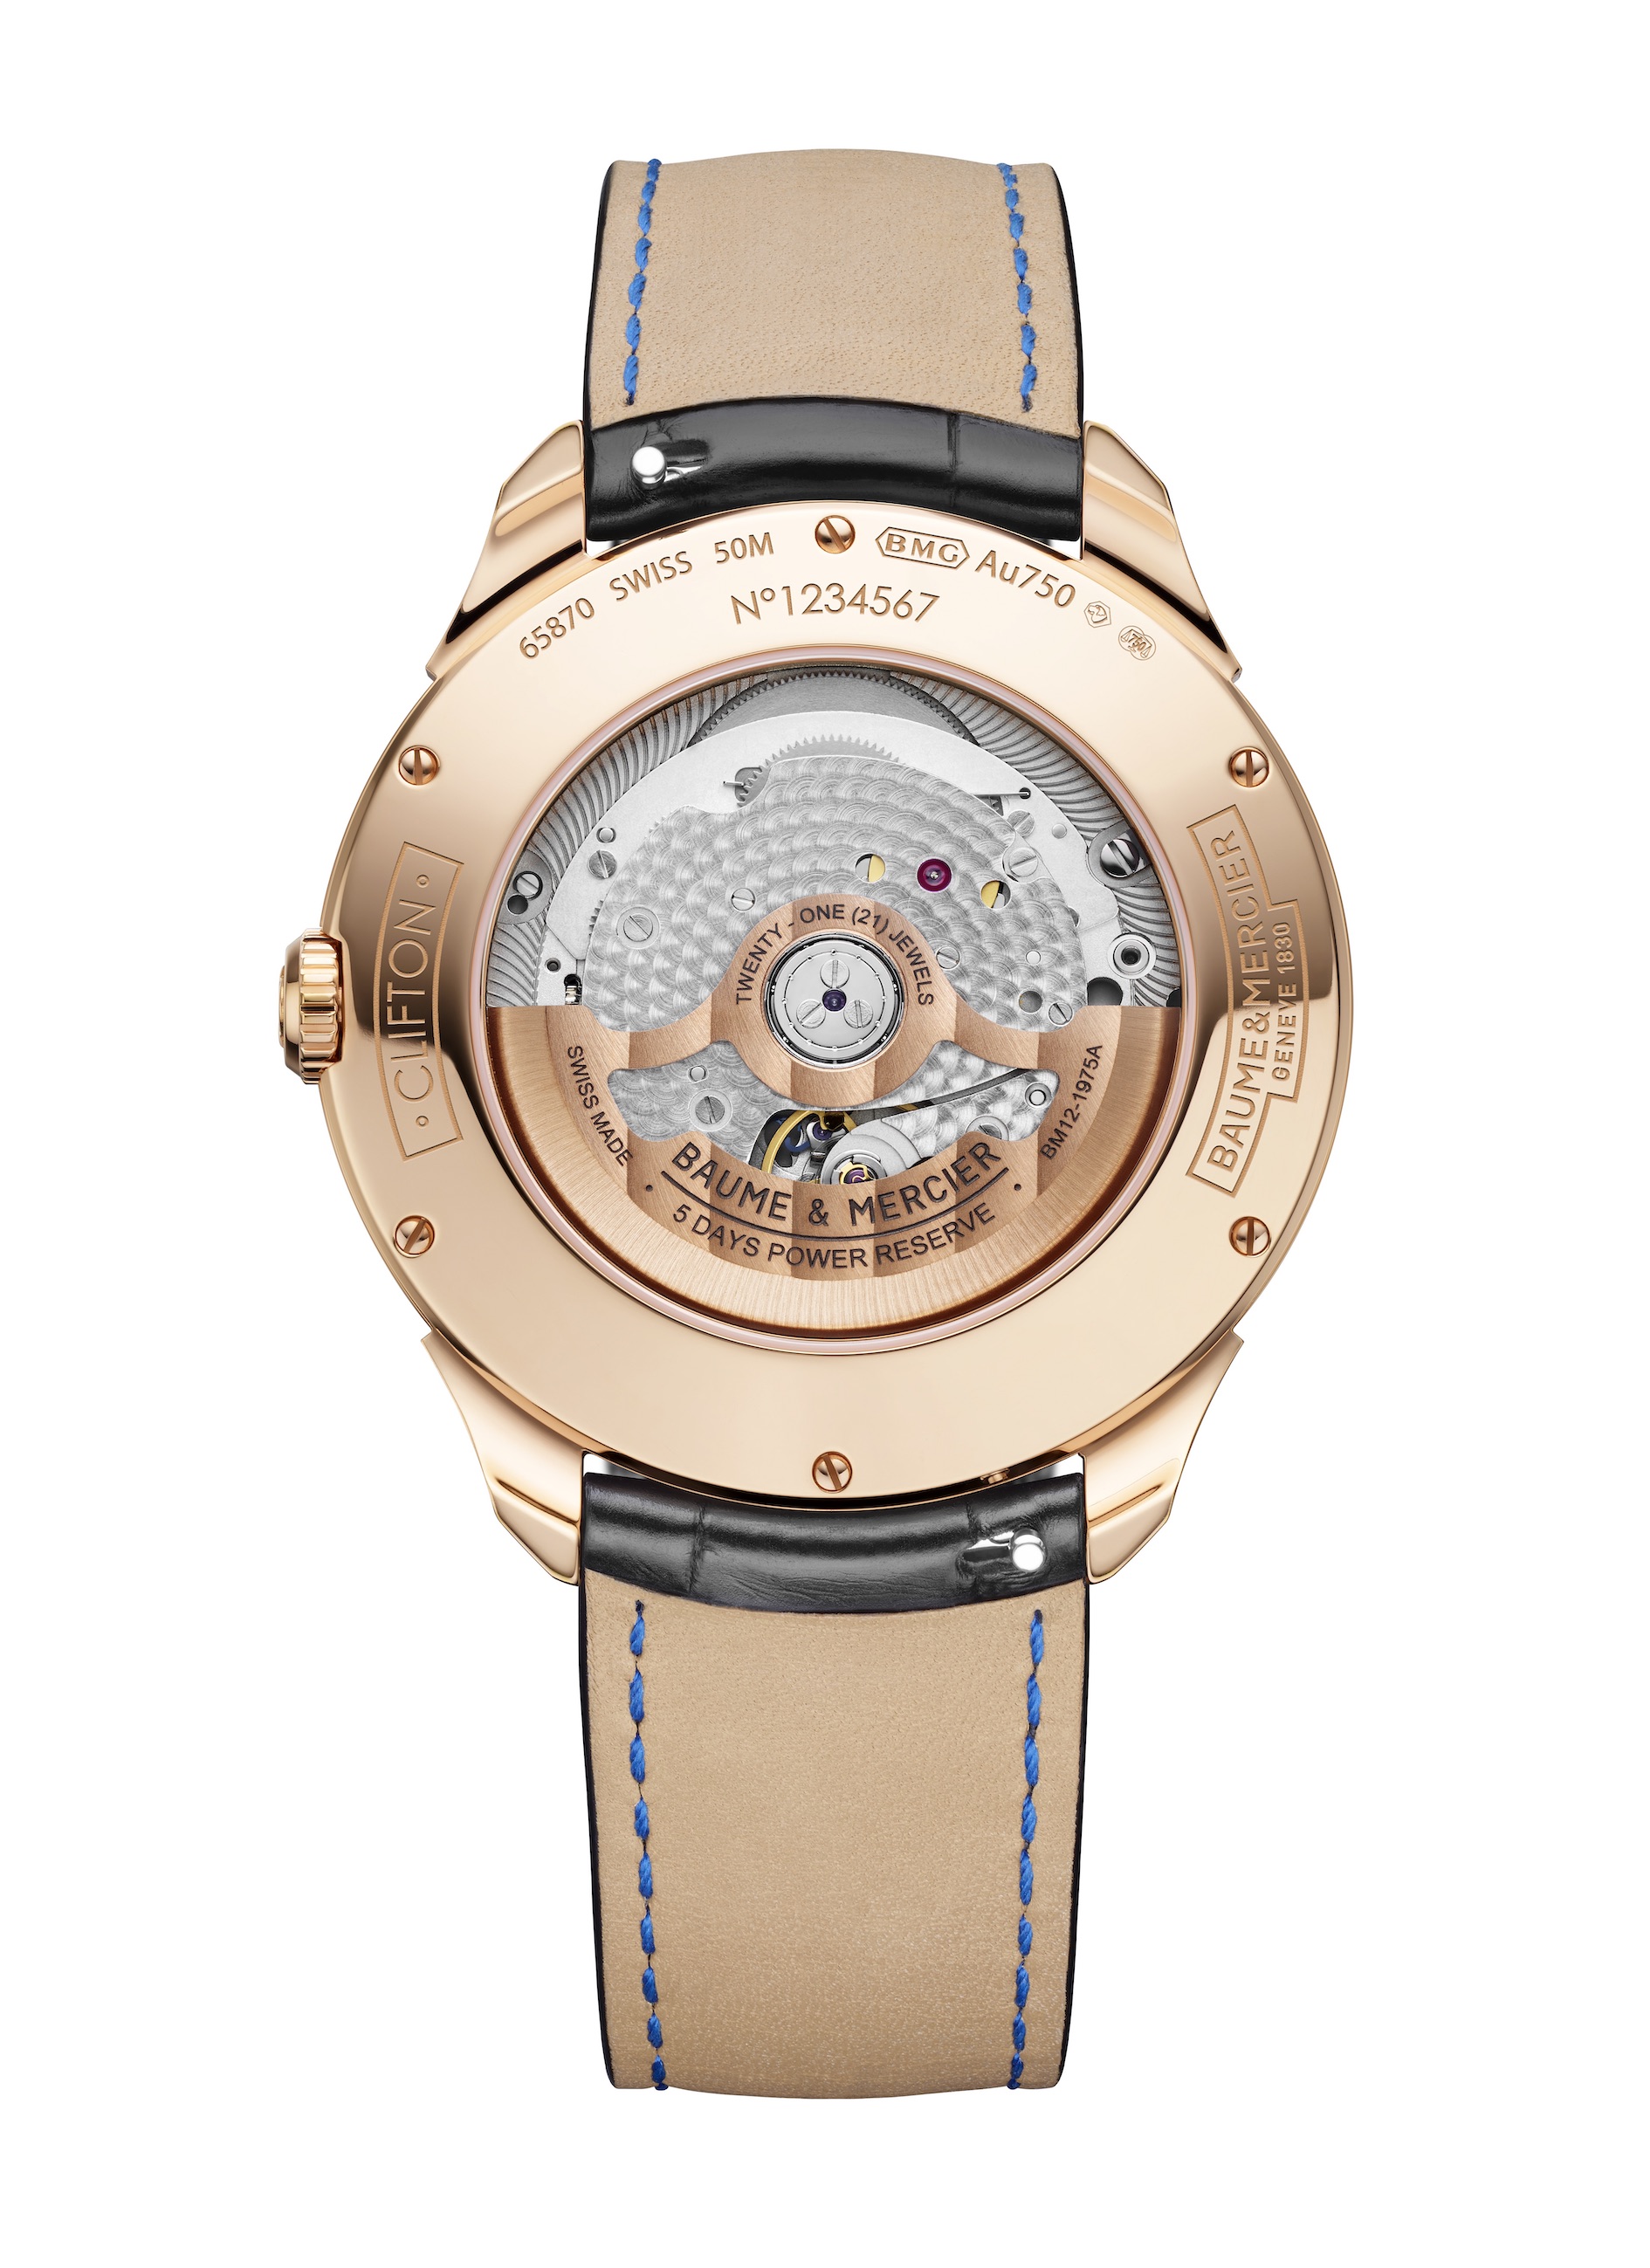 The Baume & Mercier Clifton Baumatic Perpetual Calendar watch joins the Baumatic BM13-1975AC-1 movement with a perpetual calendar module 